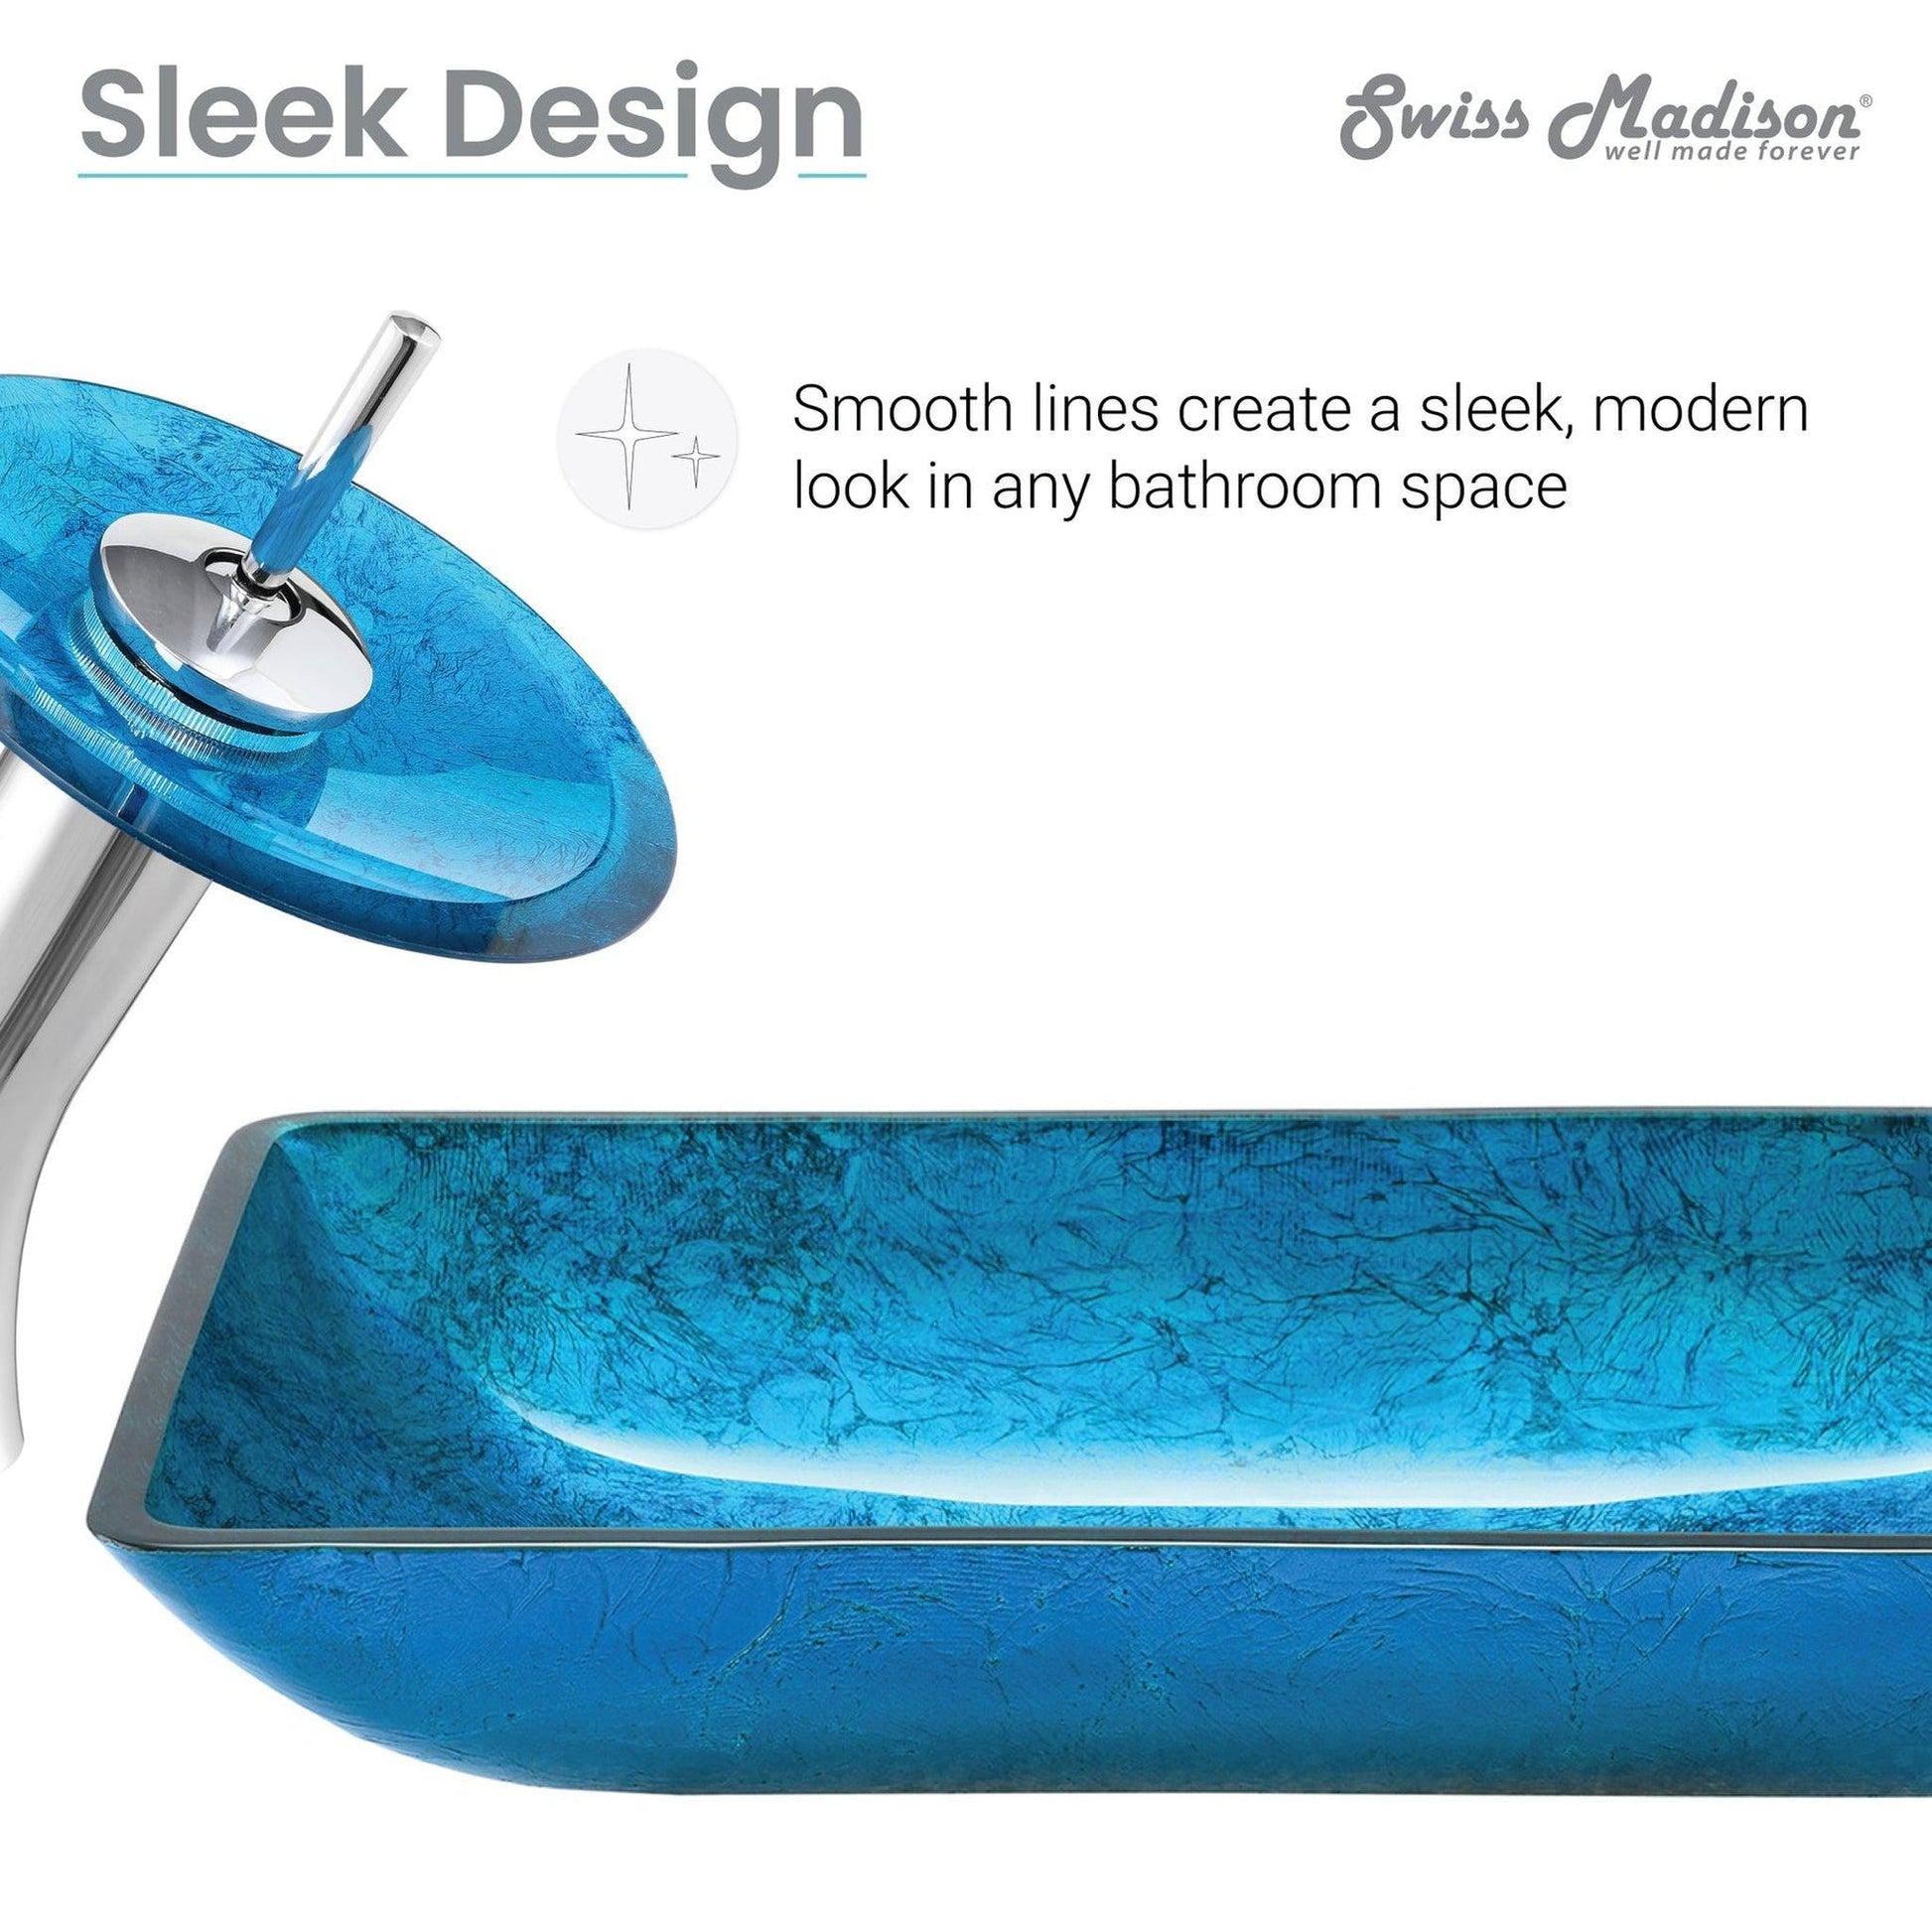 Swiss Madison Cascade 22" x 14" Ocean Blue Rectangular Tempered Glass Bathroom Vessel Sink With Waterfall Faucet